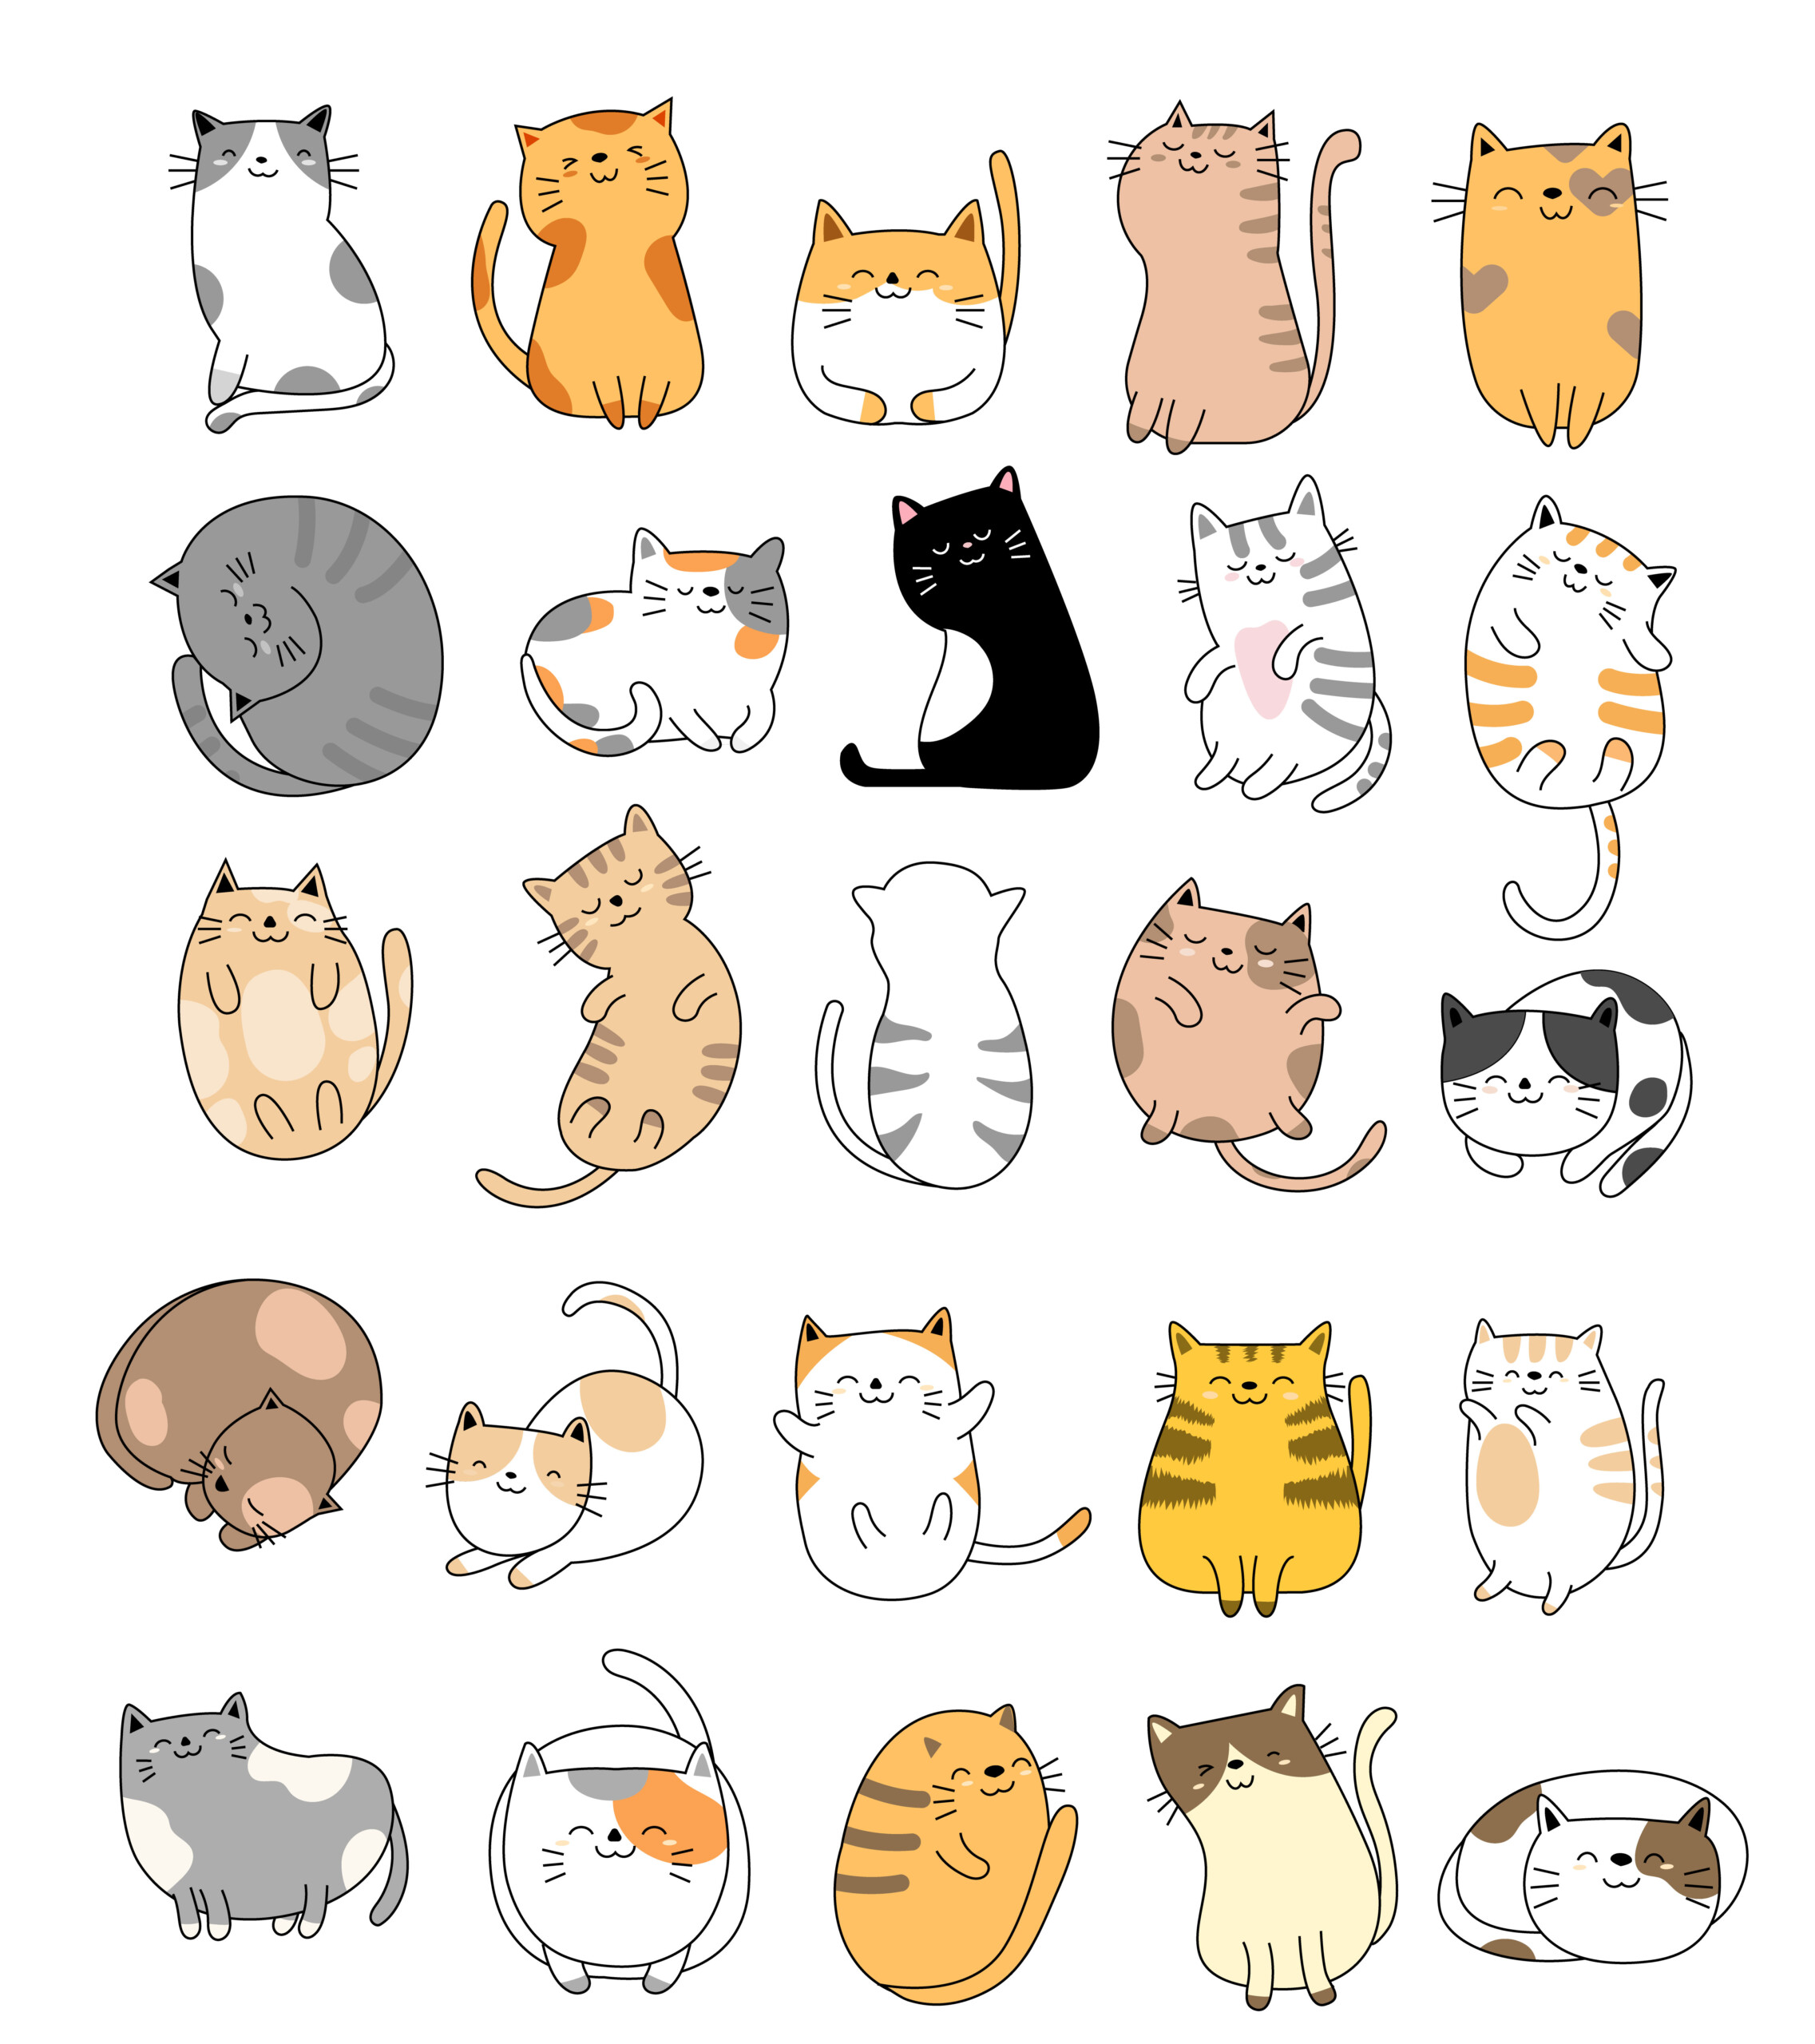 Different Cats - Original image